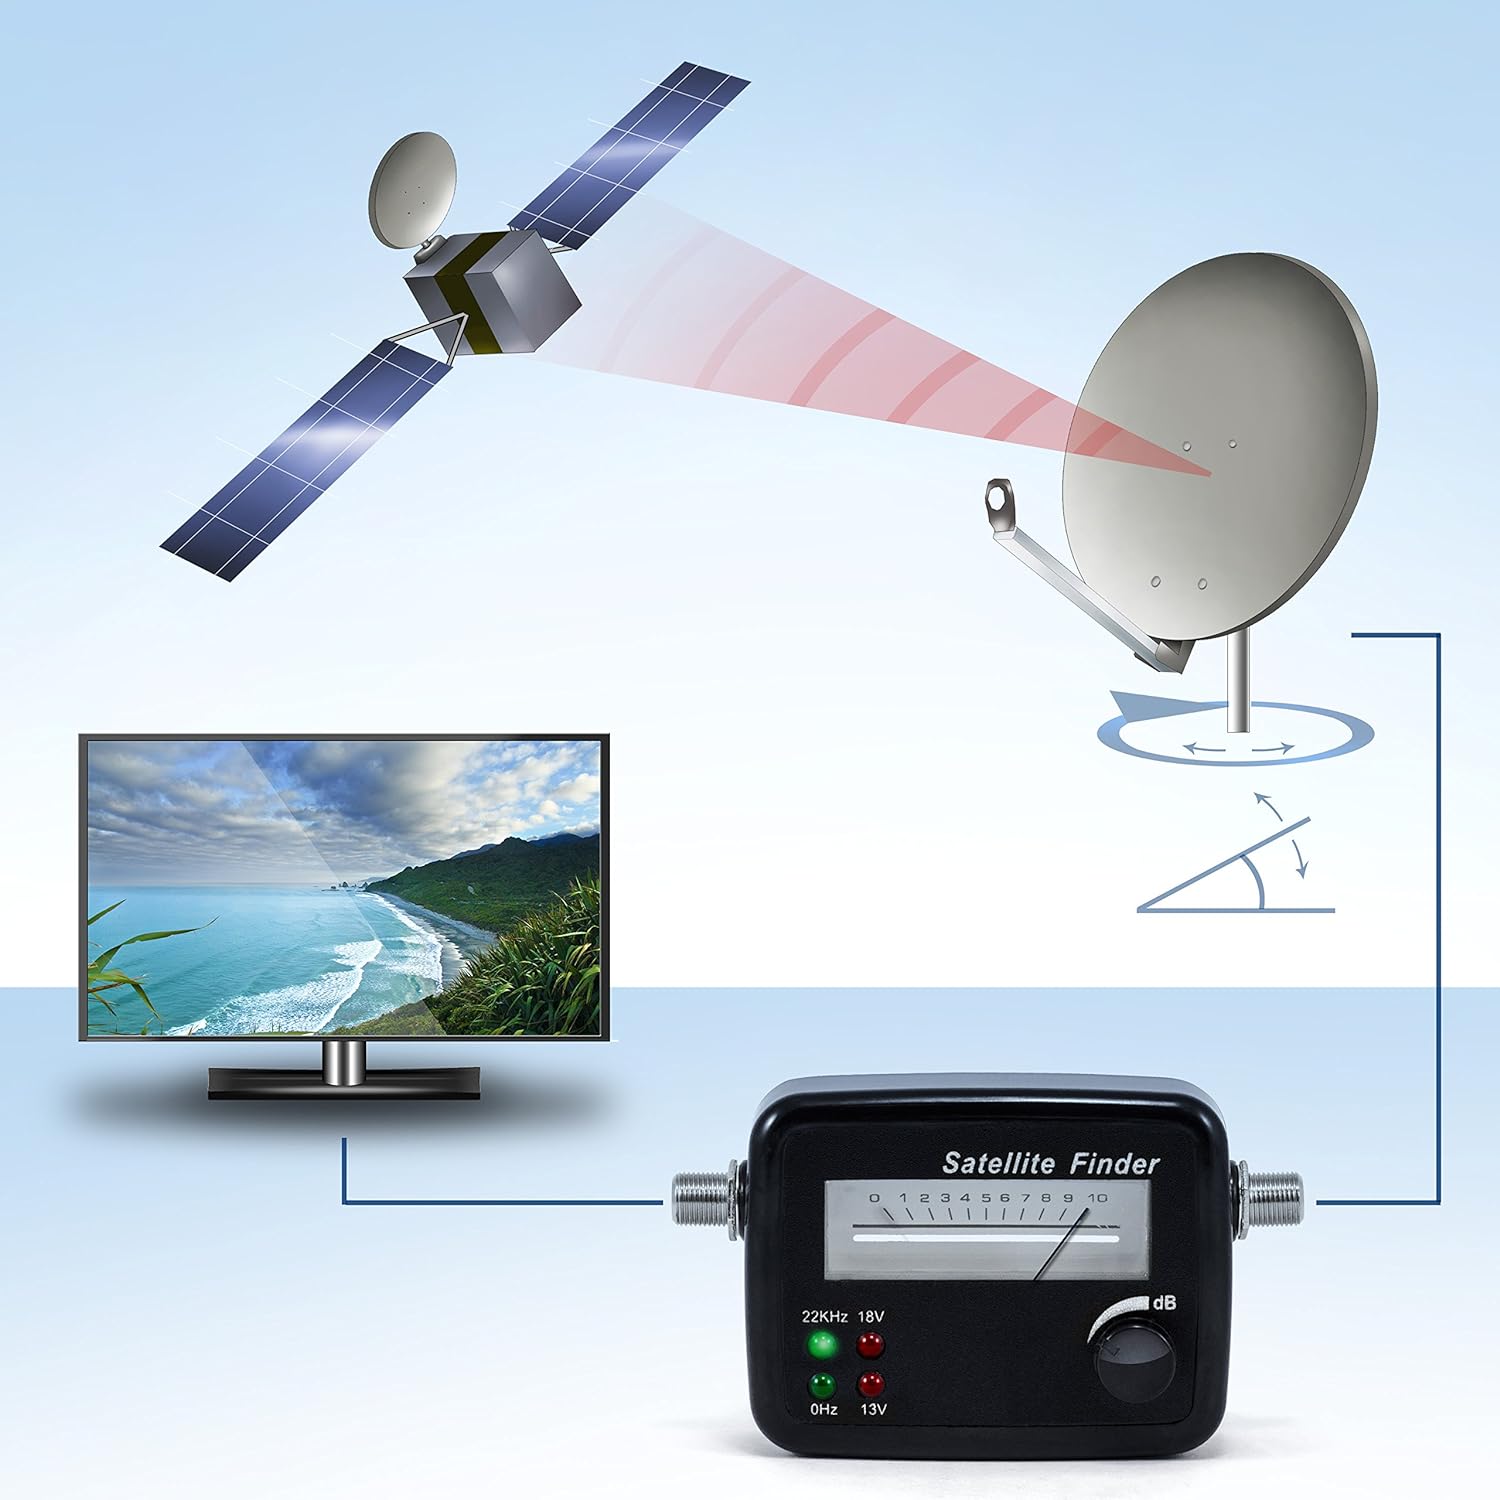 Satellite Measurement And Control Market